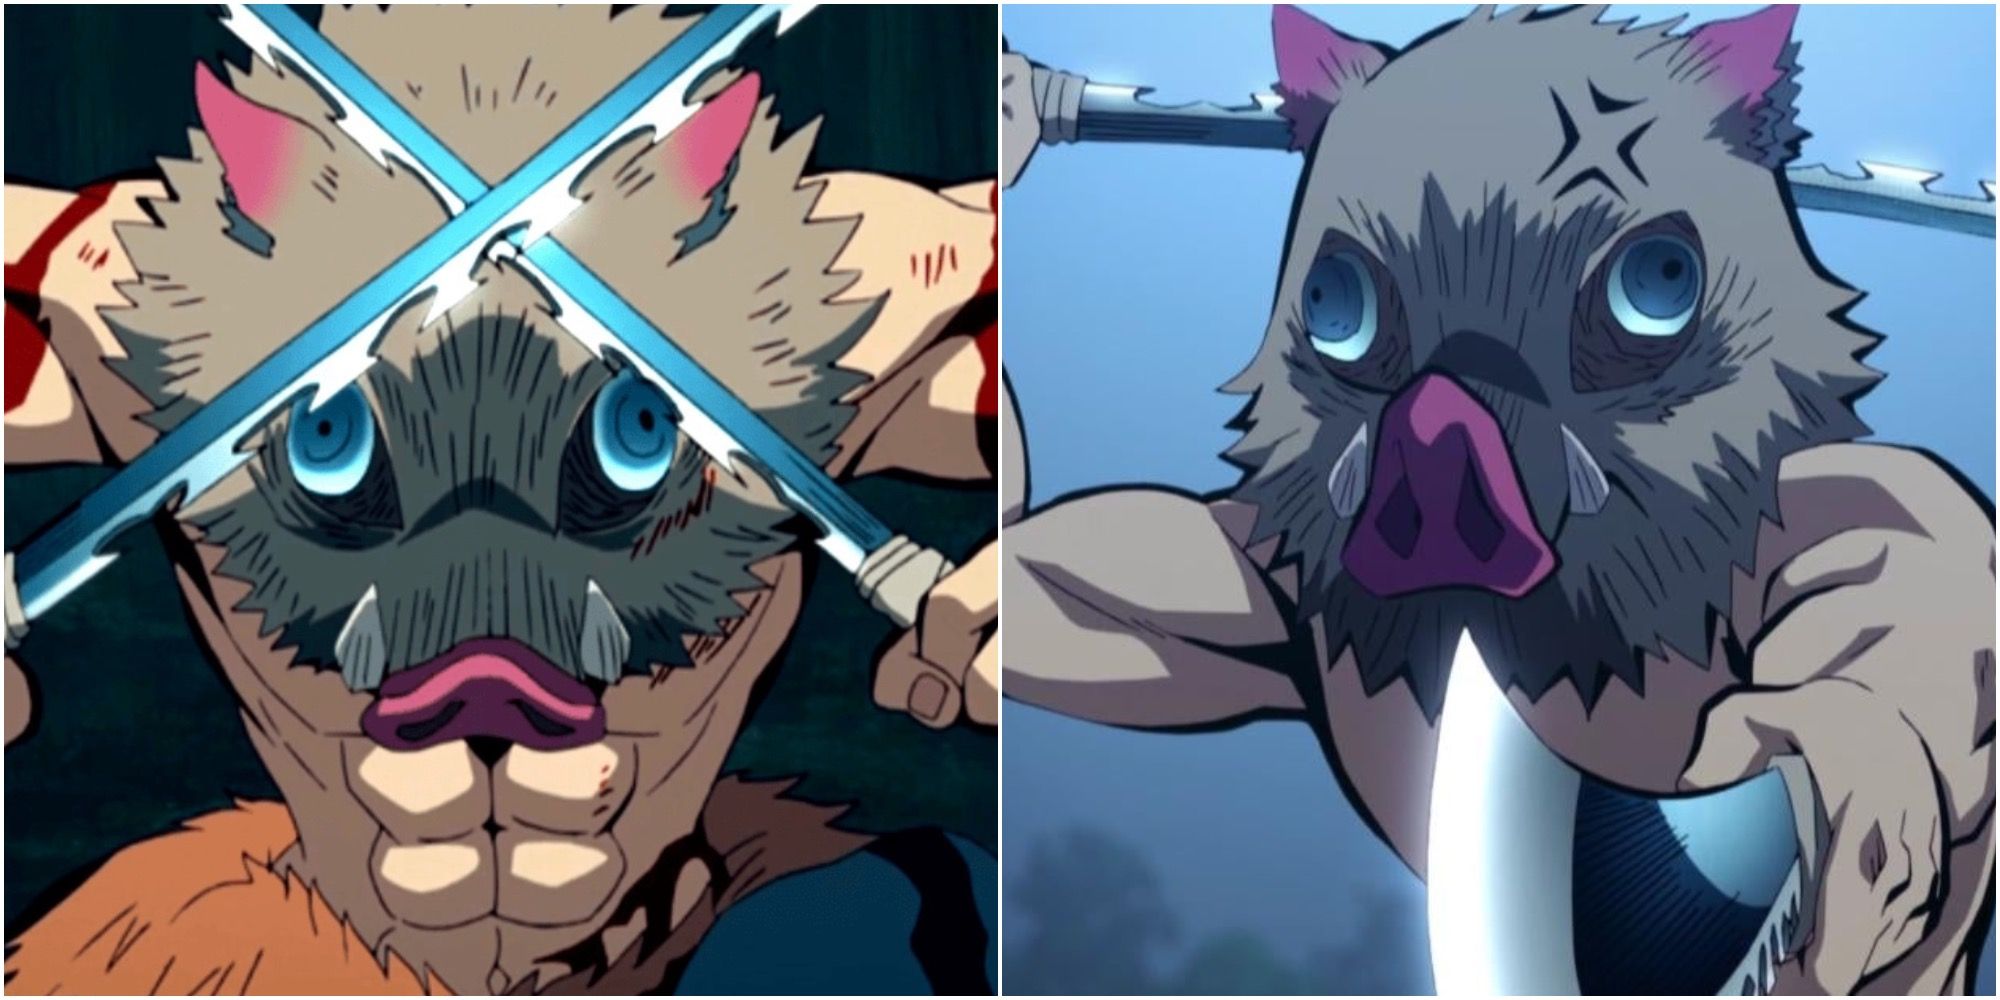 Demon Slayer: Collage of Inosuke's Face